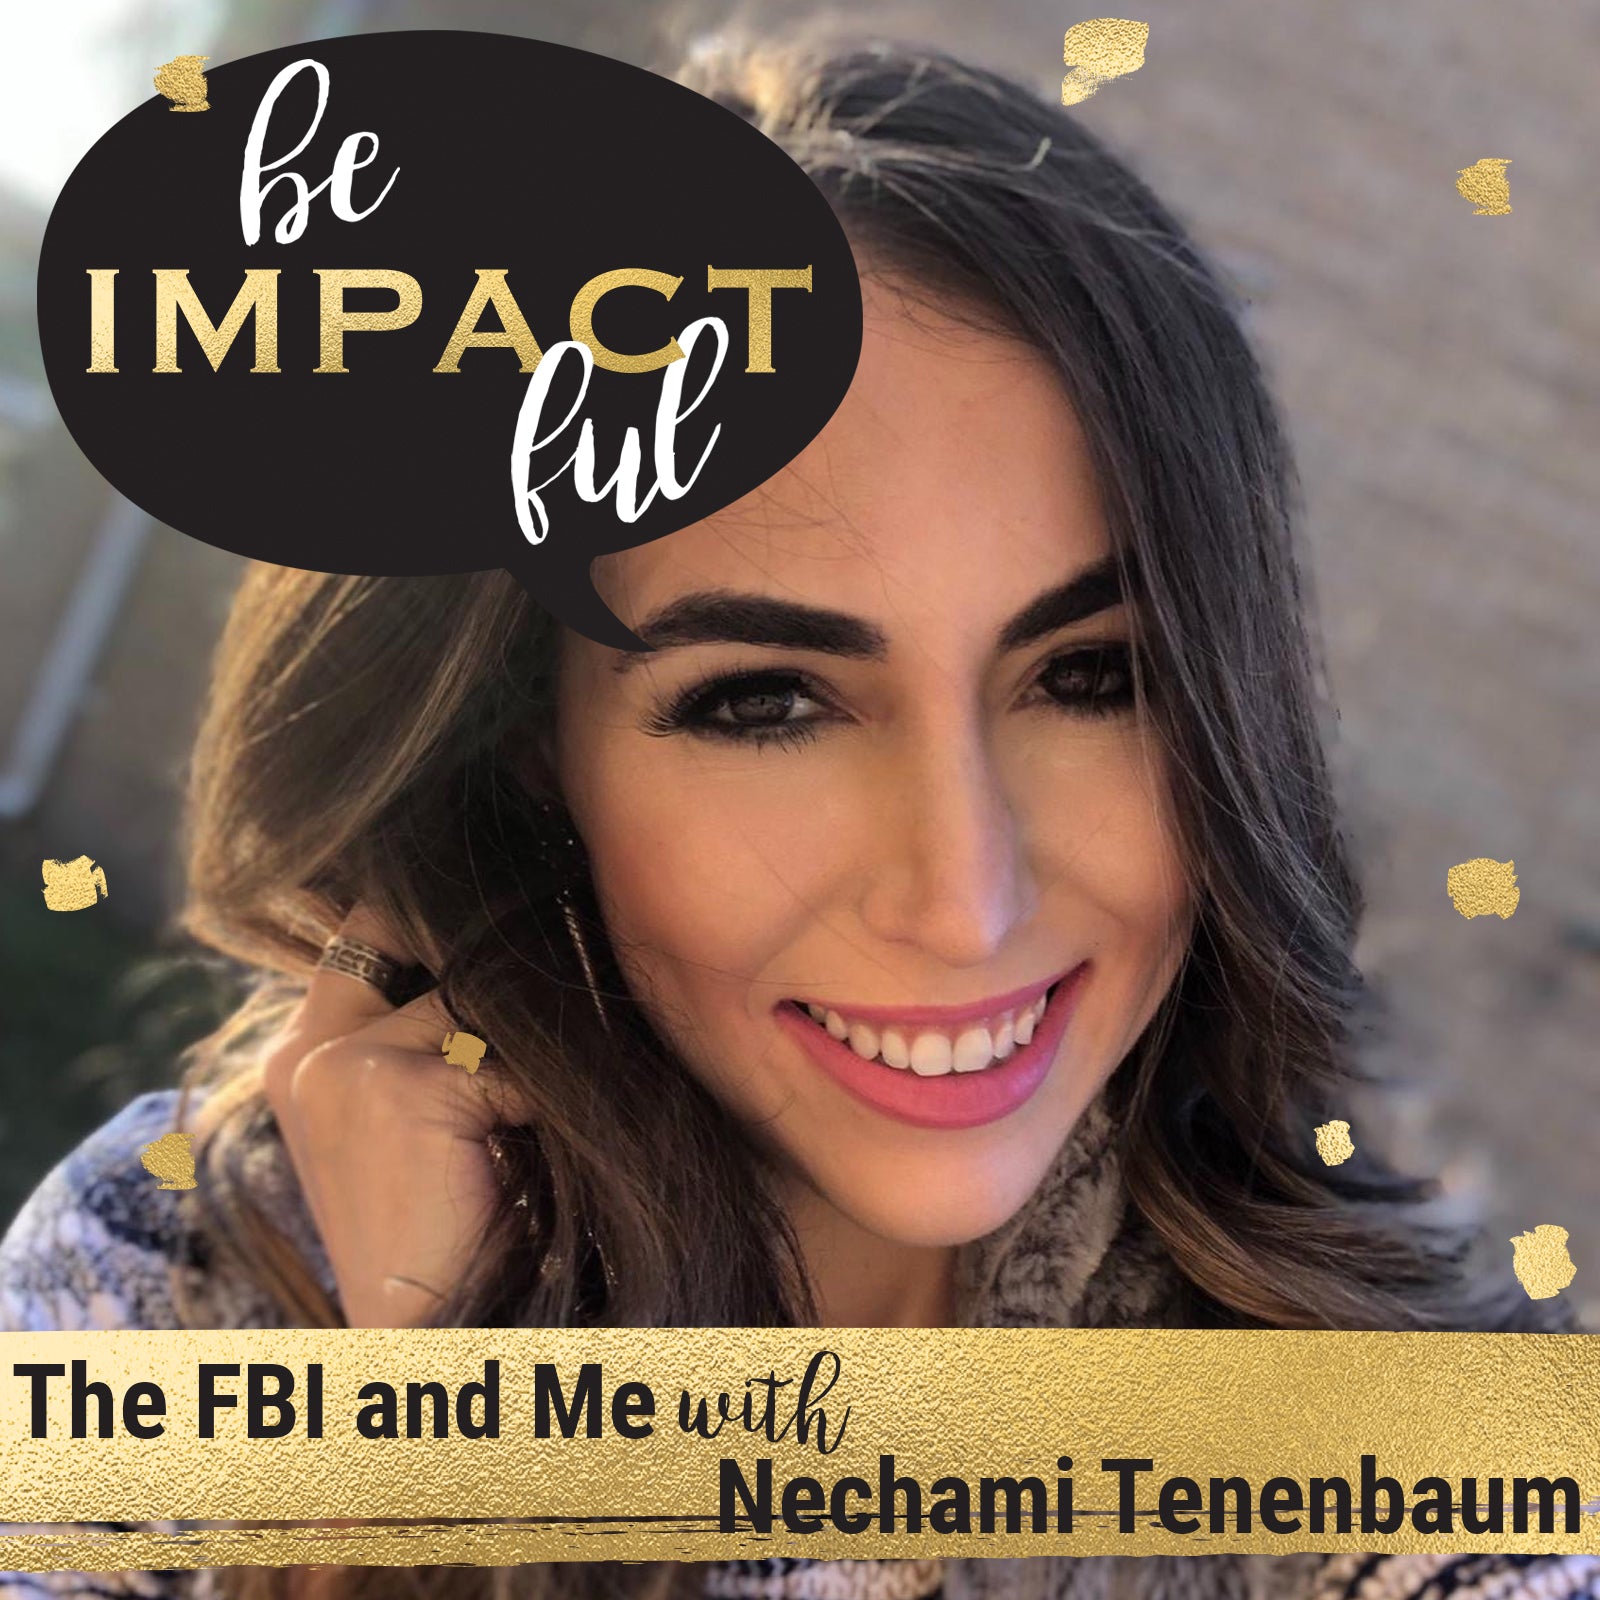 The FBI and Me with Nechami Tenenbaum